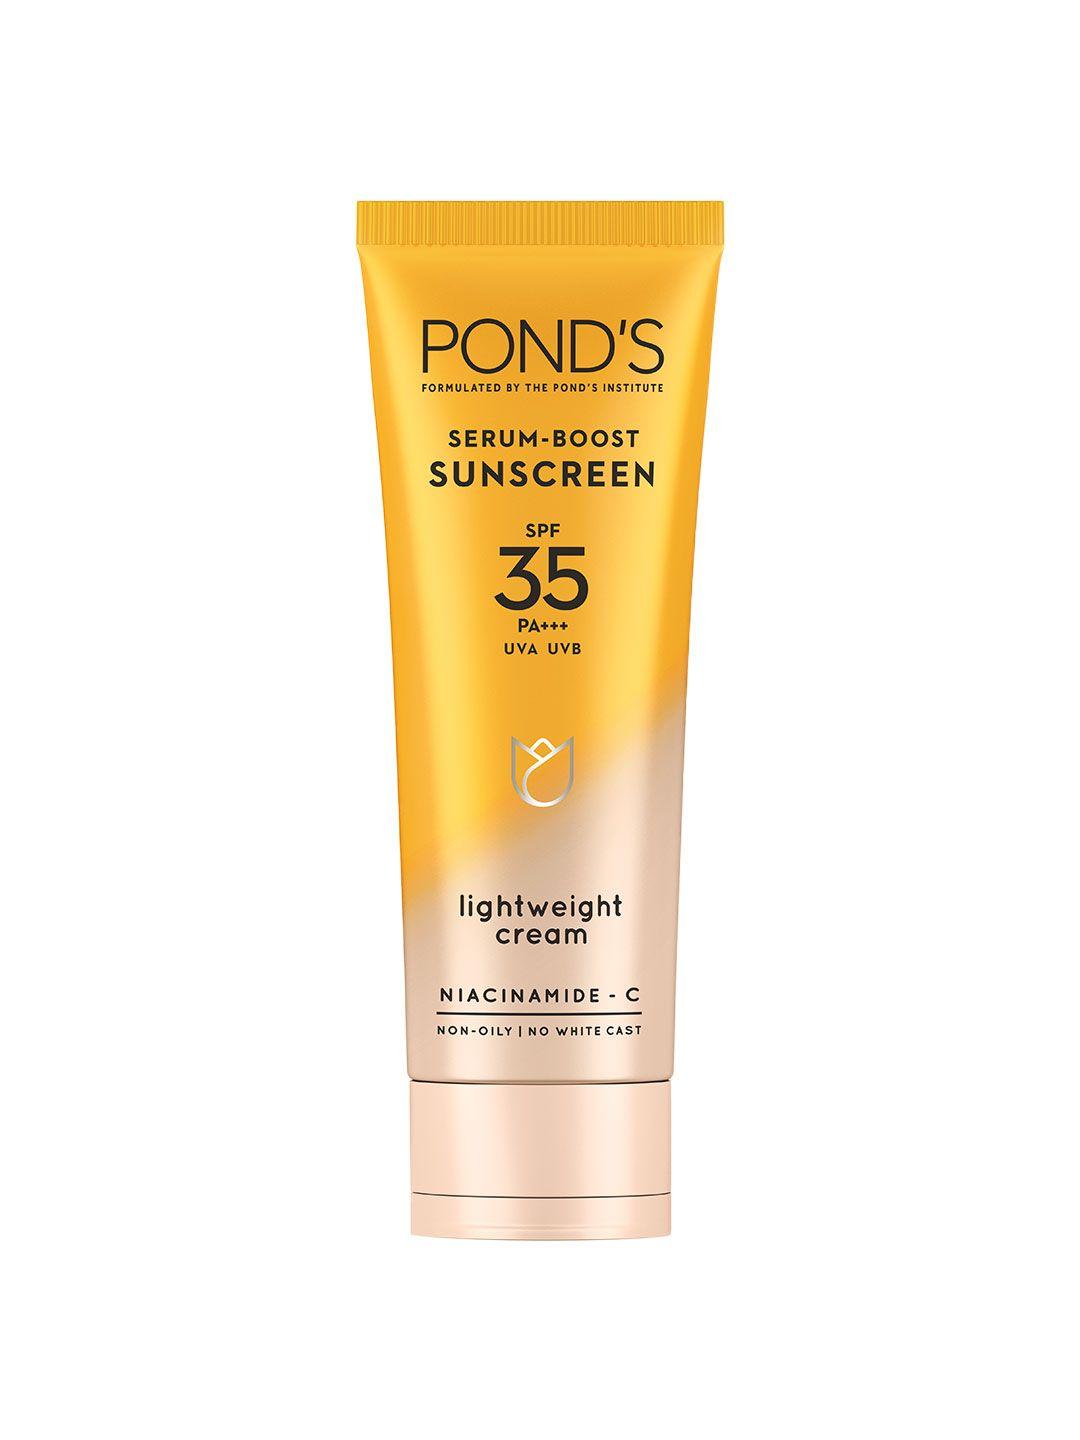 Ponds SPF 35 PA+++ UVA UVB Serum Boost Sunscreen with Niacinamide C - 50 g